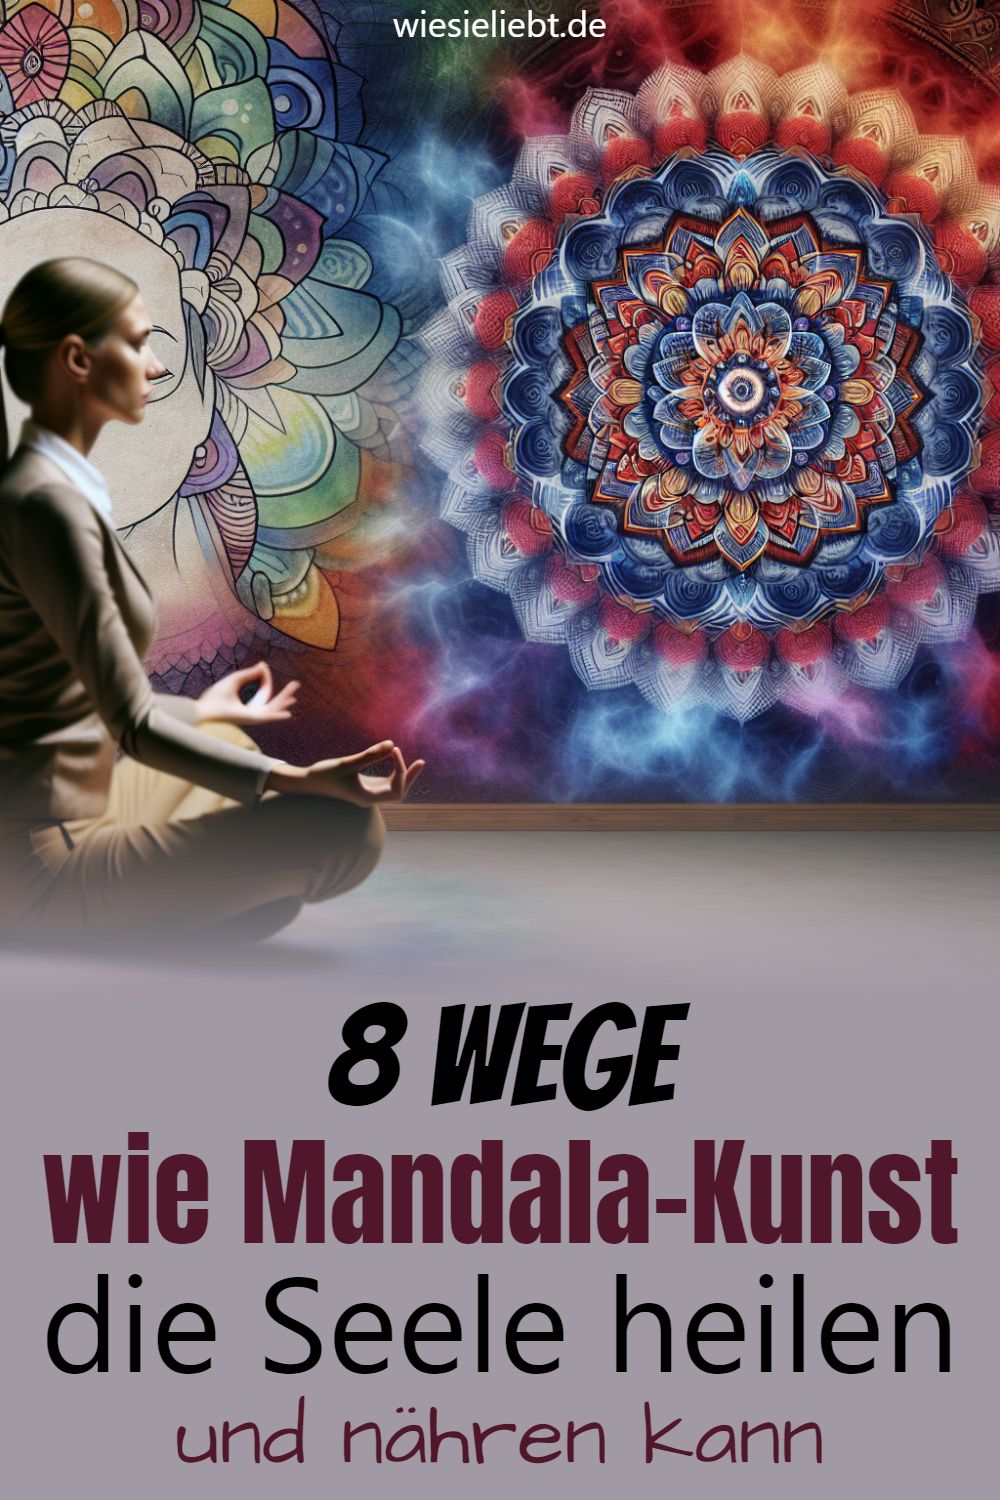 8 Wege wie Mandala-Kunst die Seele heilen und nähren kann